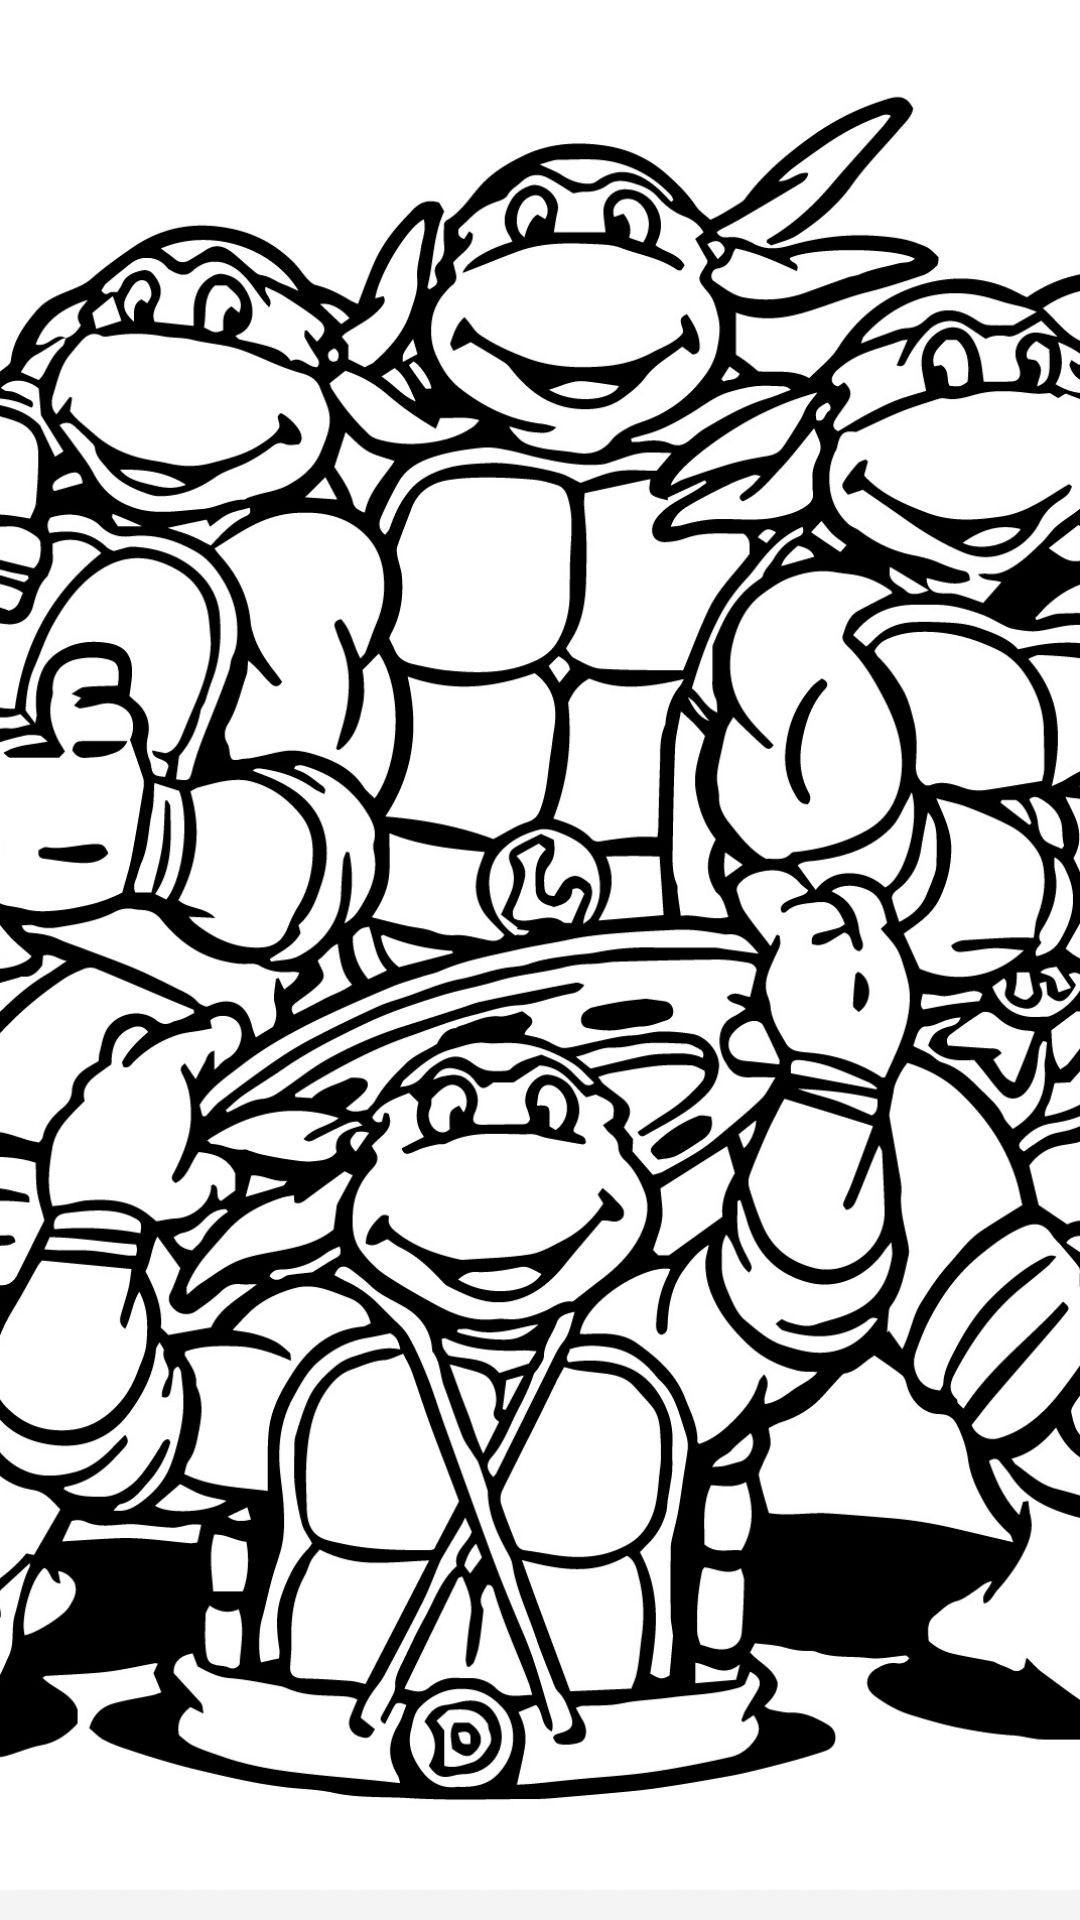 Coloring Sheets For Boys Ninja Turtles
 Beautiful Printable Coloring Pages for Boys Ninja Turtles